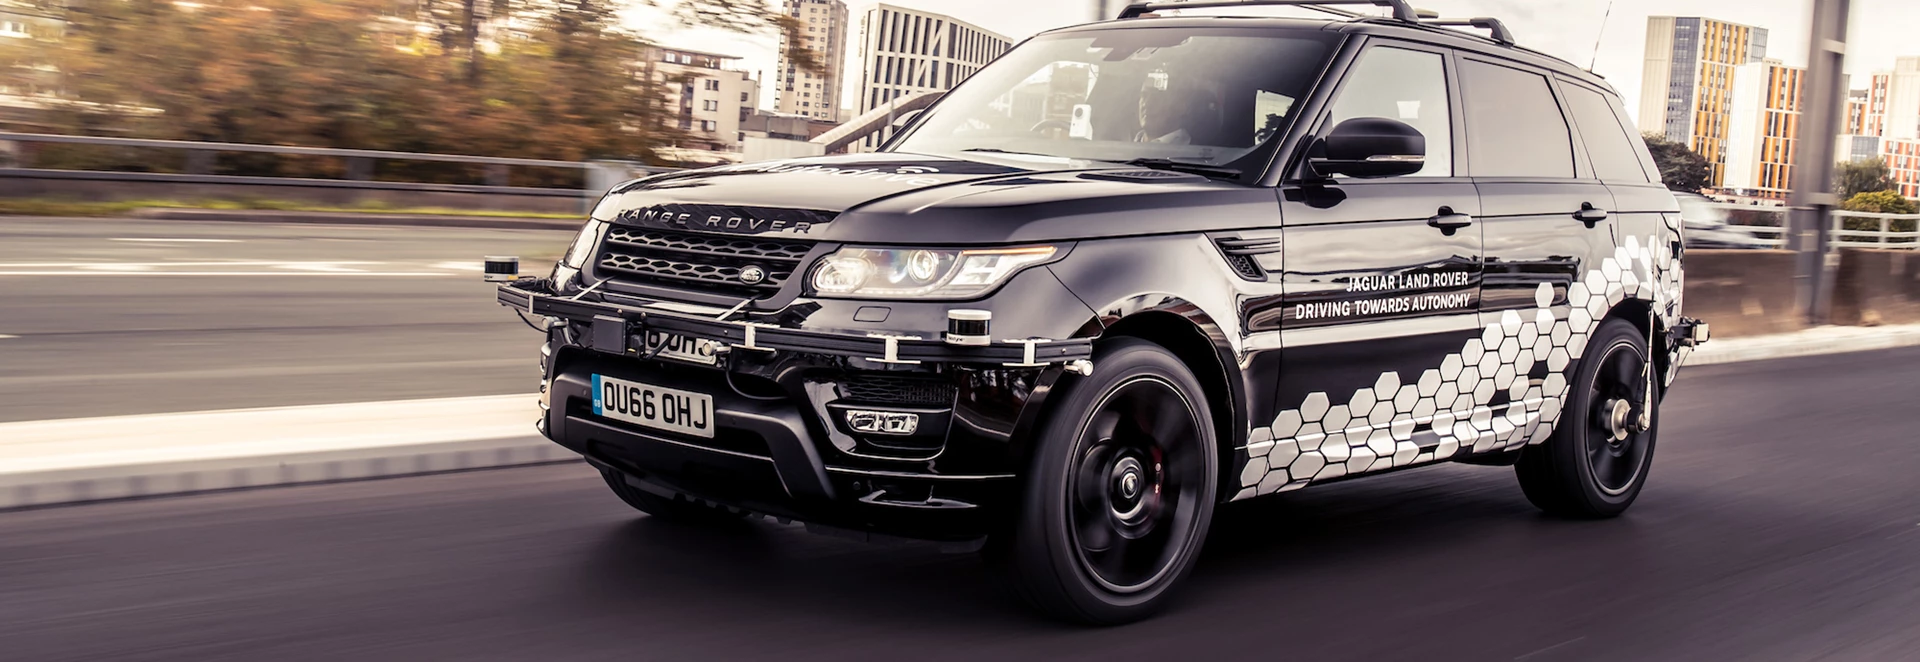 Jaguar Land Rover backs new driverless vehicle centre 